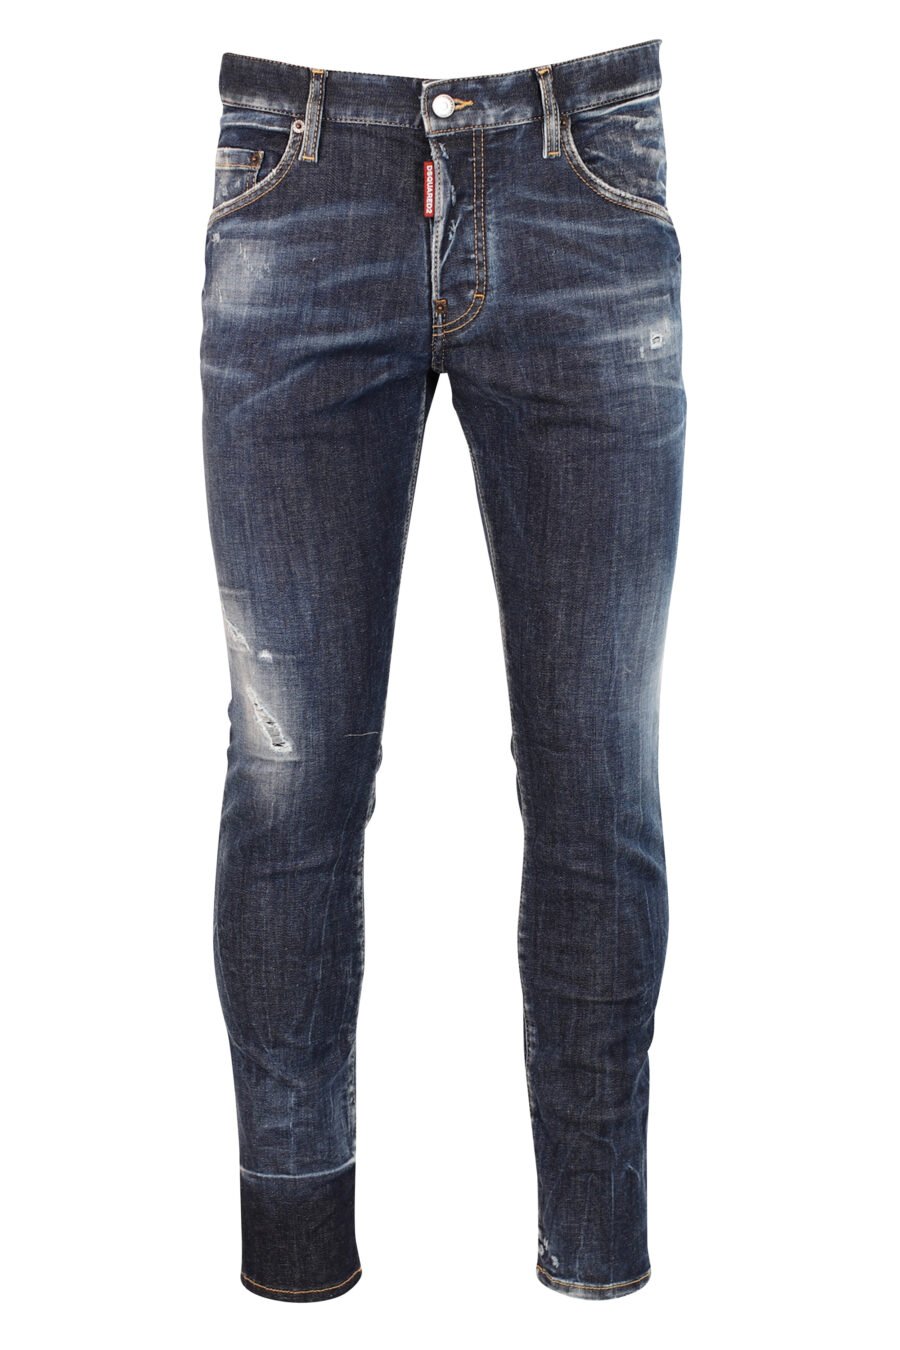 Blaue "Skater"-Jeanshose mit halb zerrissenem und halb zerrissenem Stoff - 8052134966679